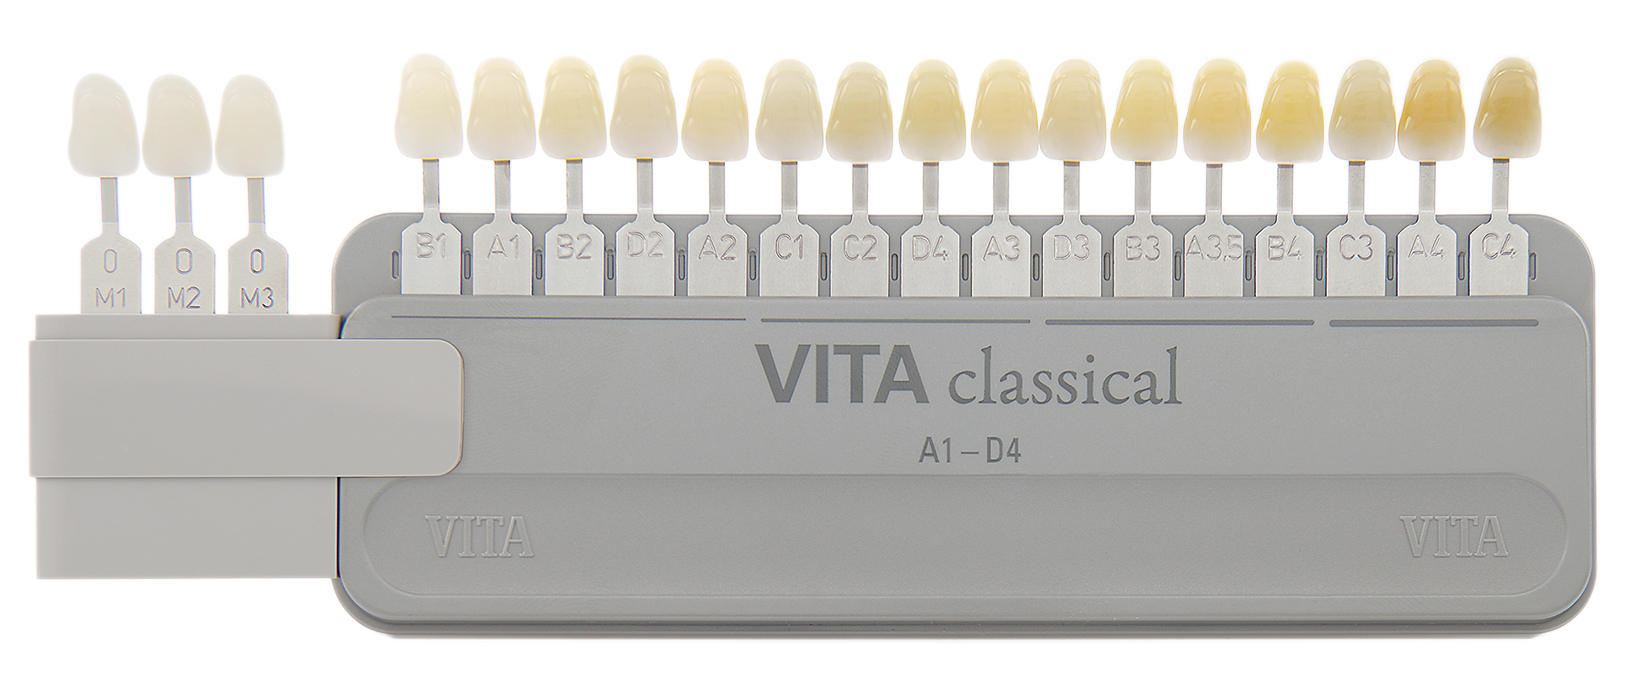 Шкала цветовая VITA classical A1-D4 с отбеленными оттенками Vita B027CV1